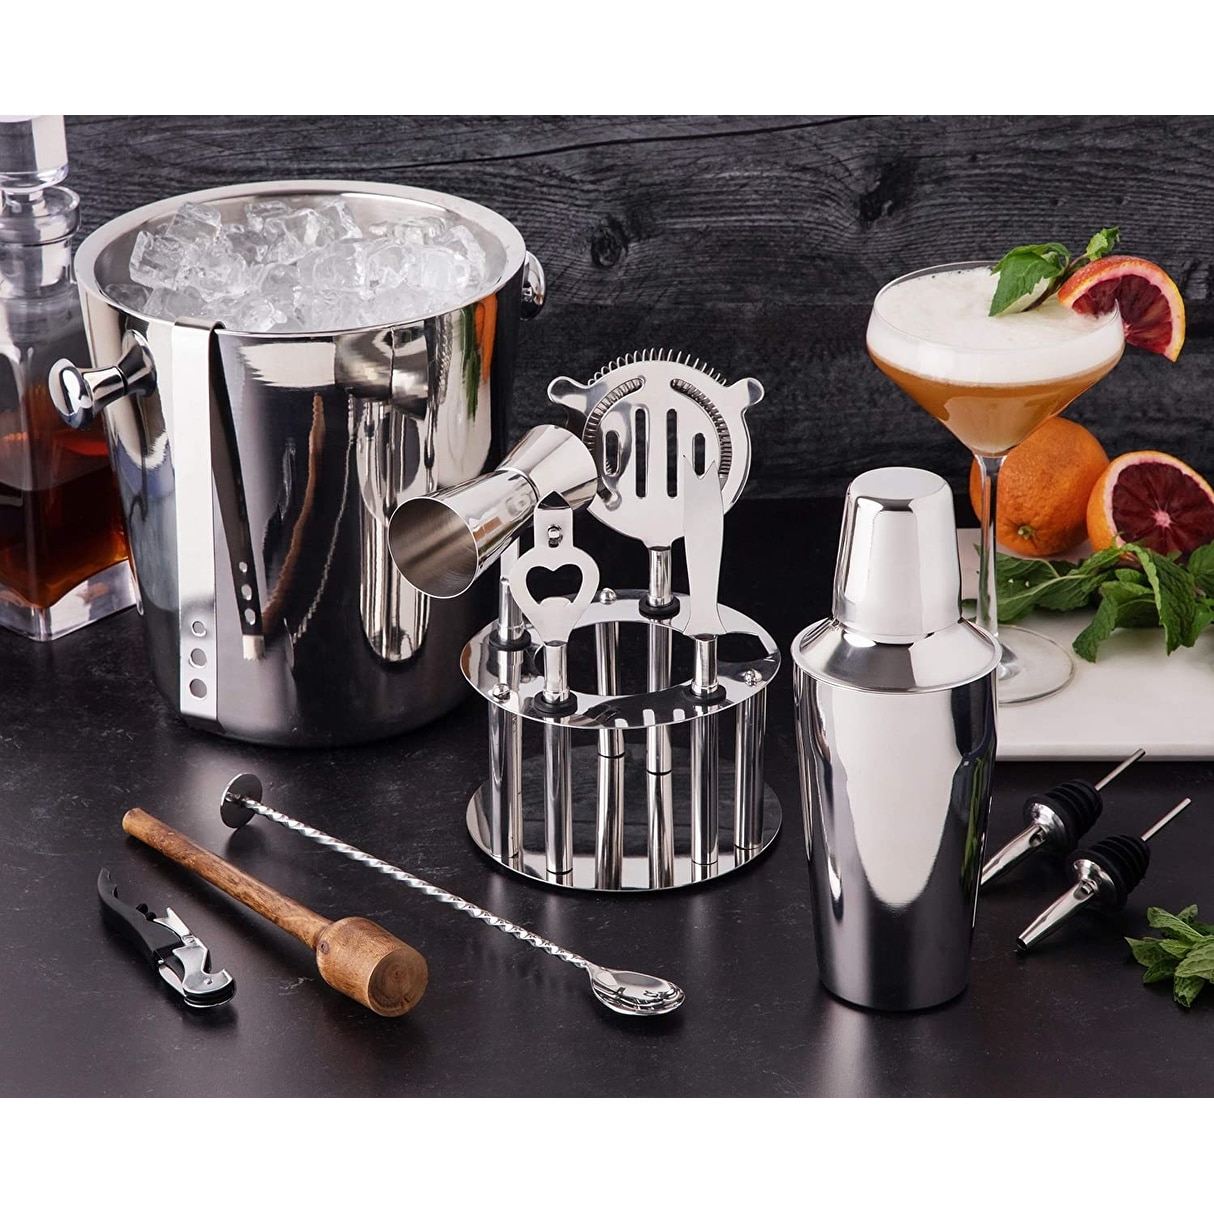 Craft Bar Set: Set of 14 Pro Bar Tools for Bartender and Home